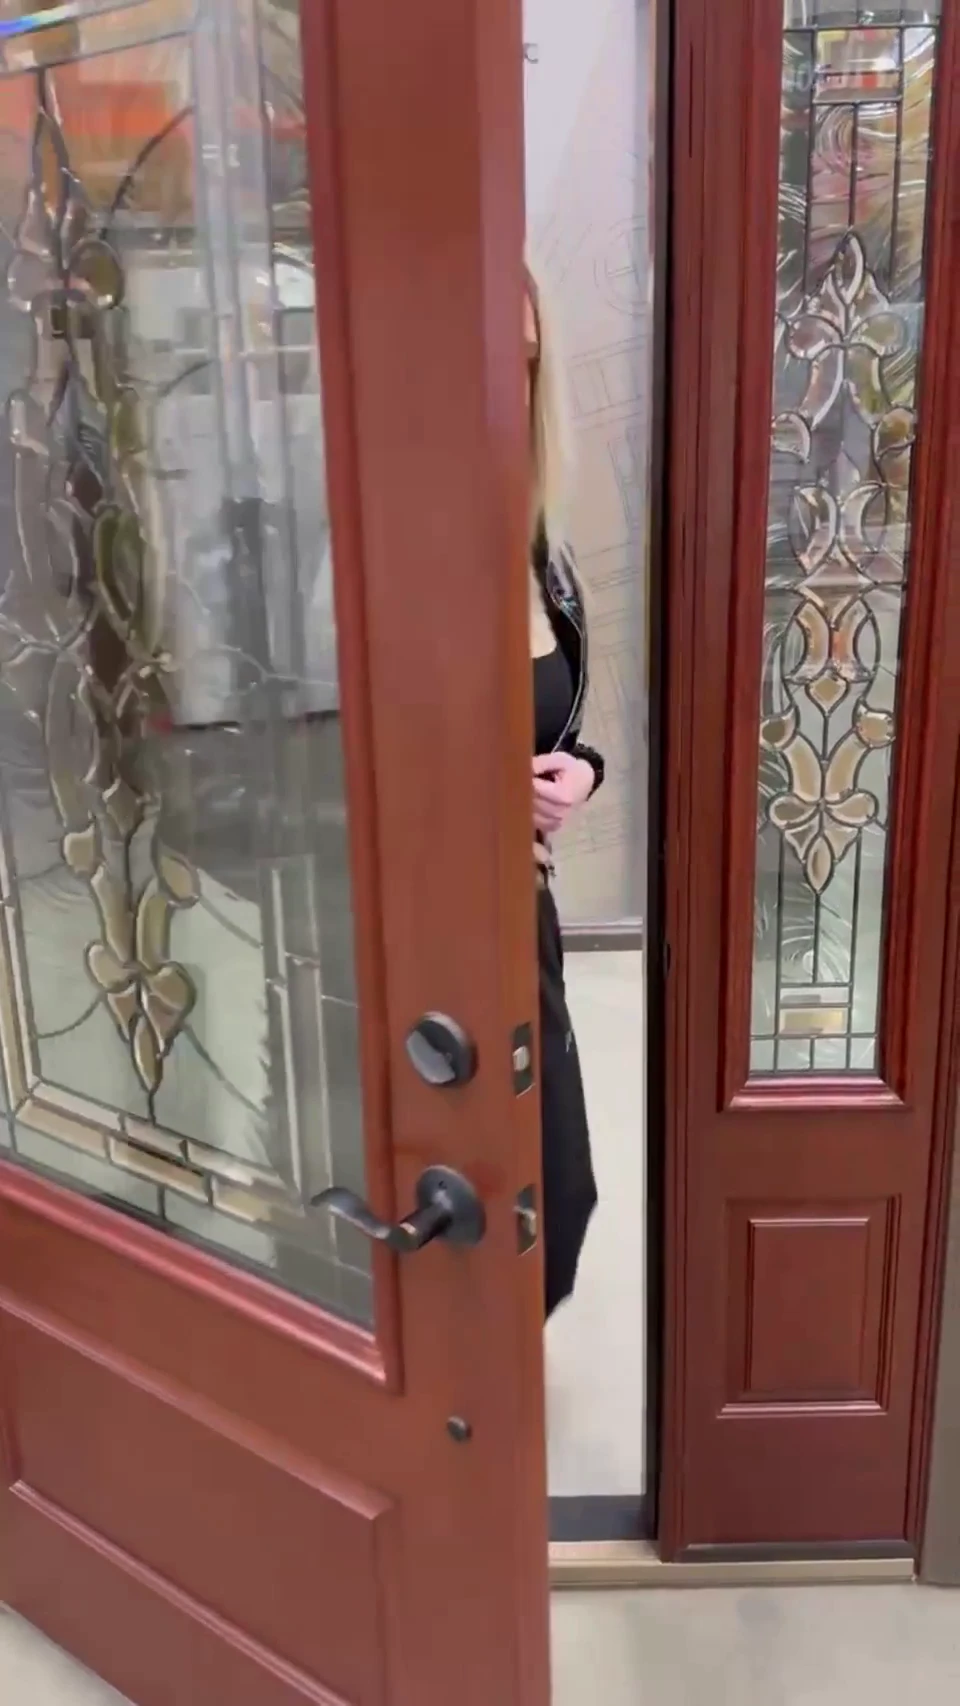 How I wanna greet my neighbors 😝 [F]